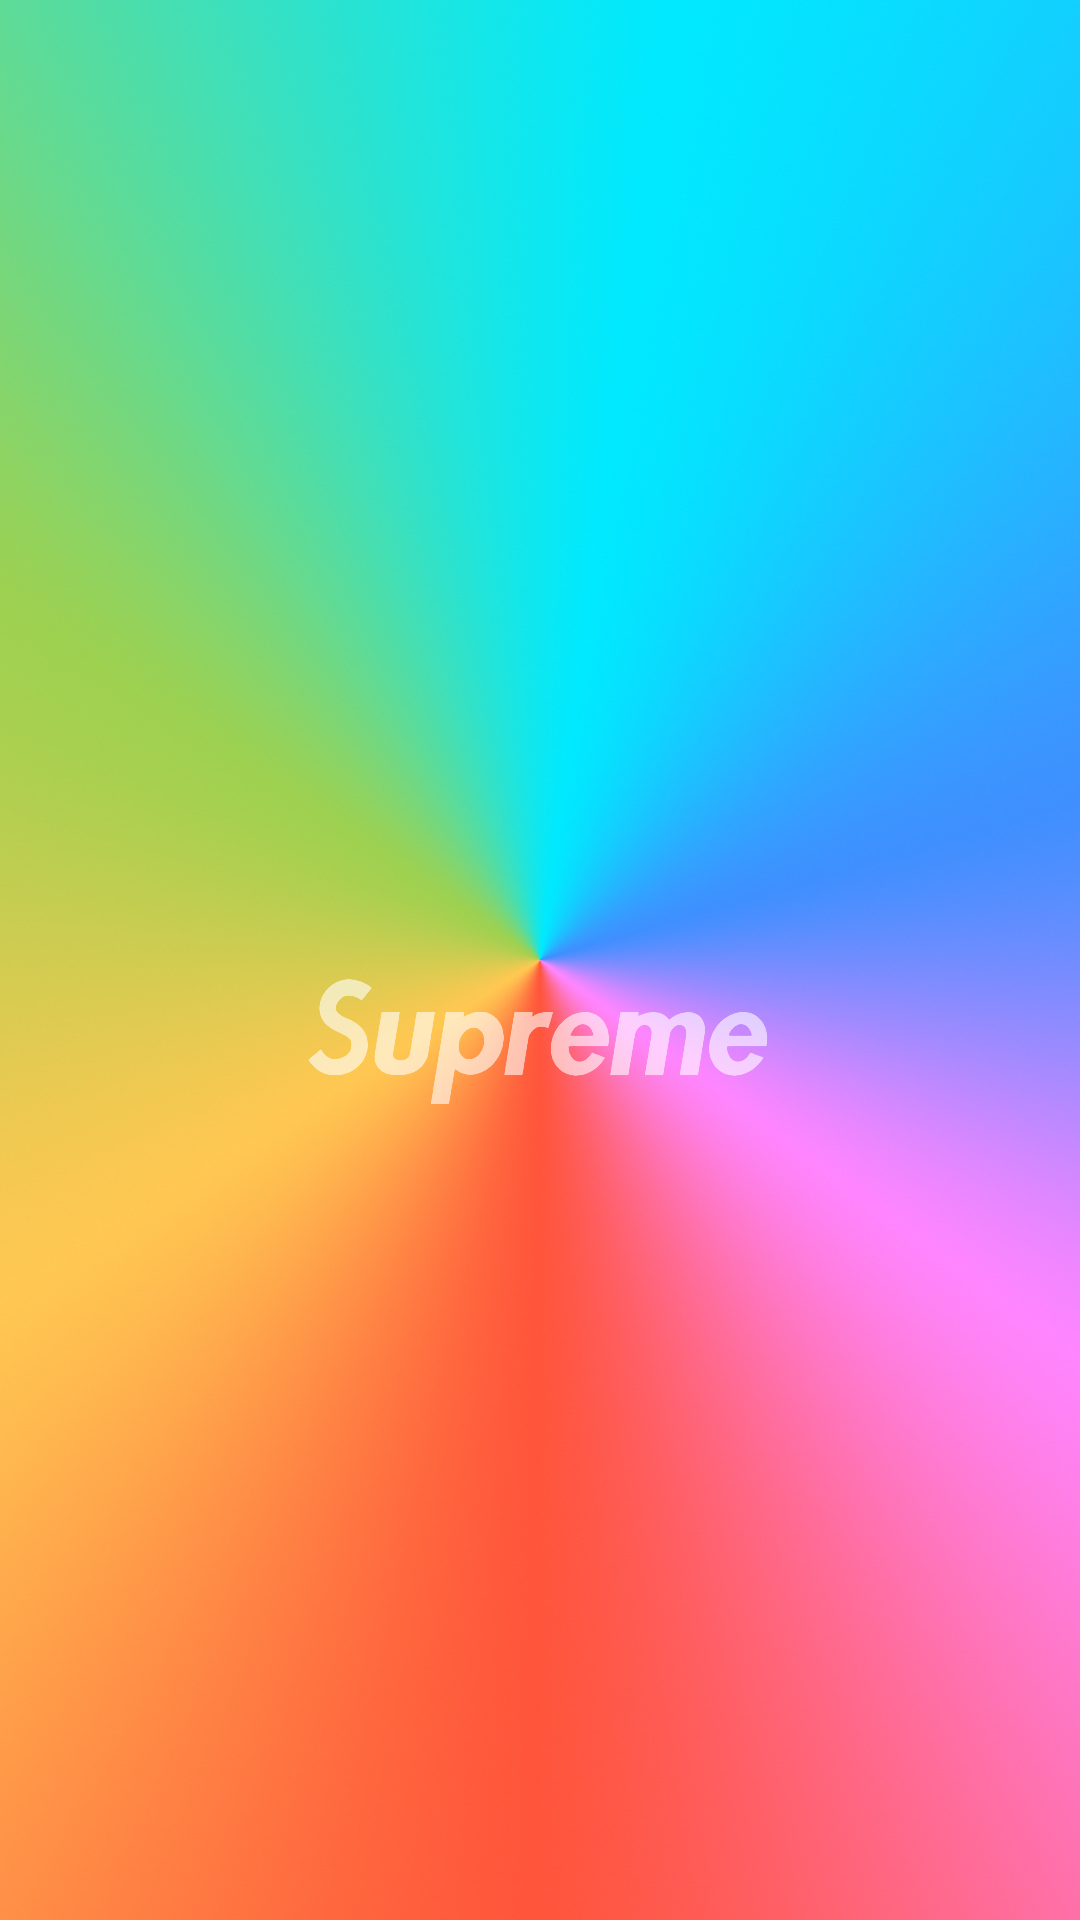 supreme23 - Supreme[シュプリーム]の高画質スマホ壁紙23枚 [iPhone＆Androidに対応]